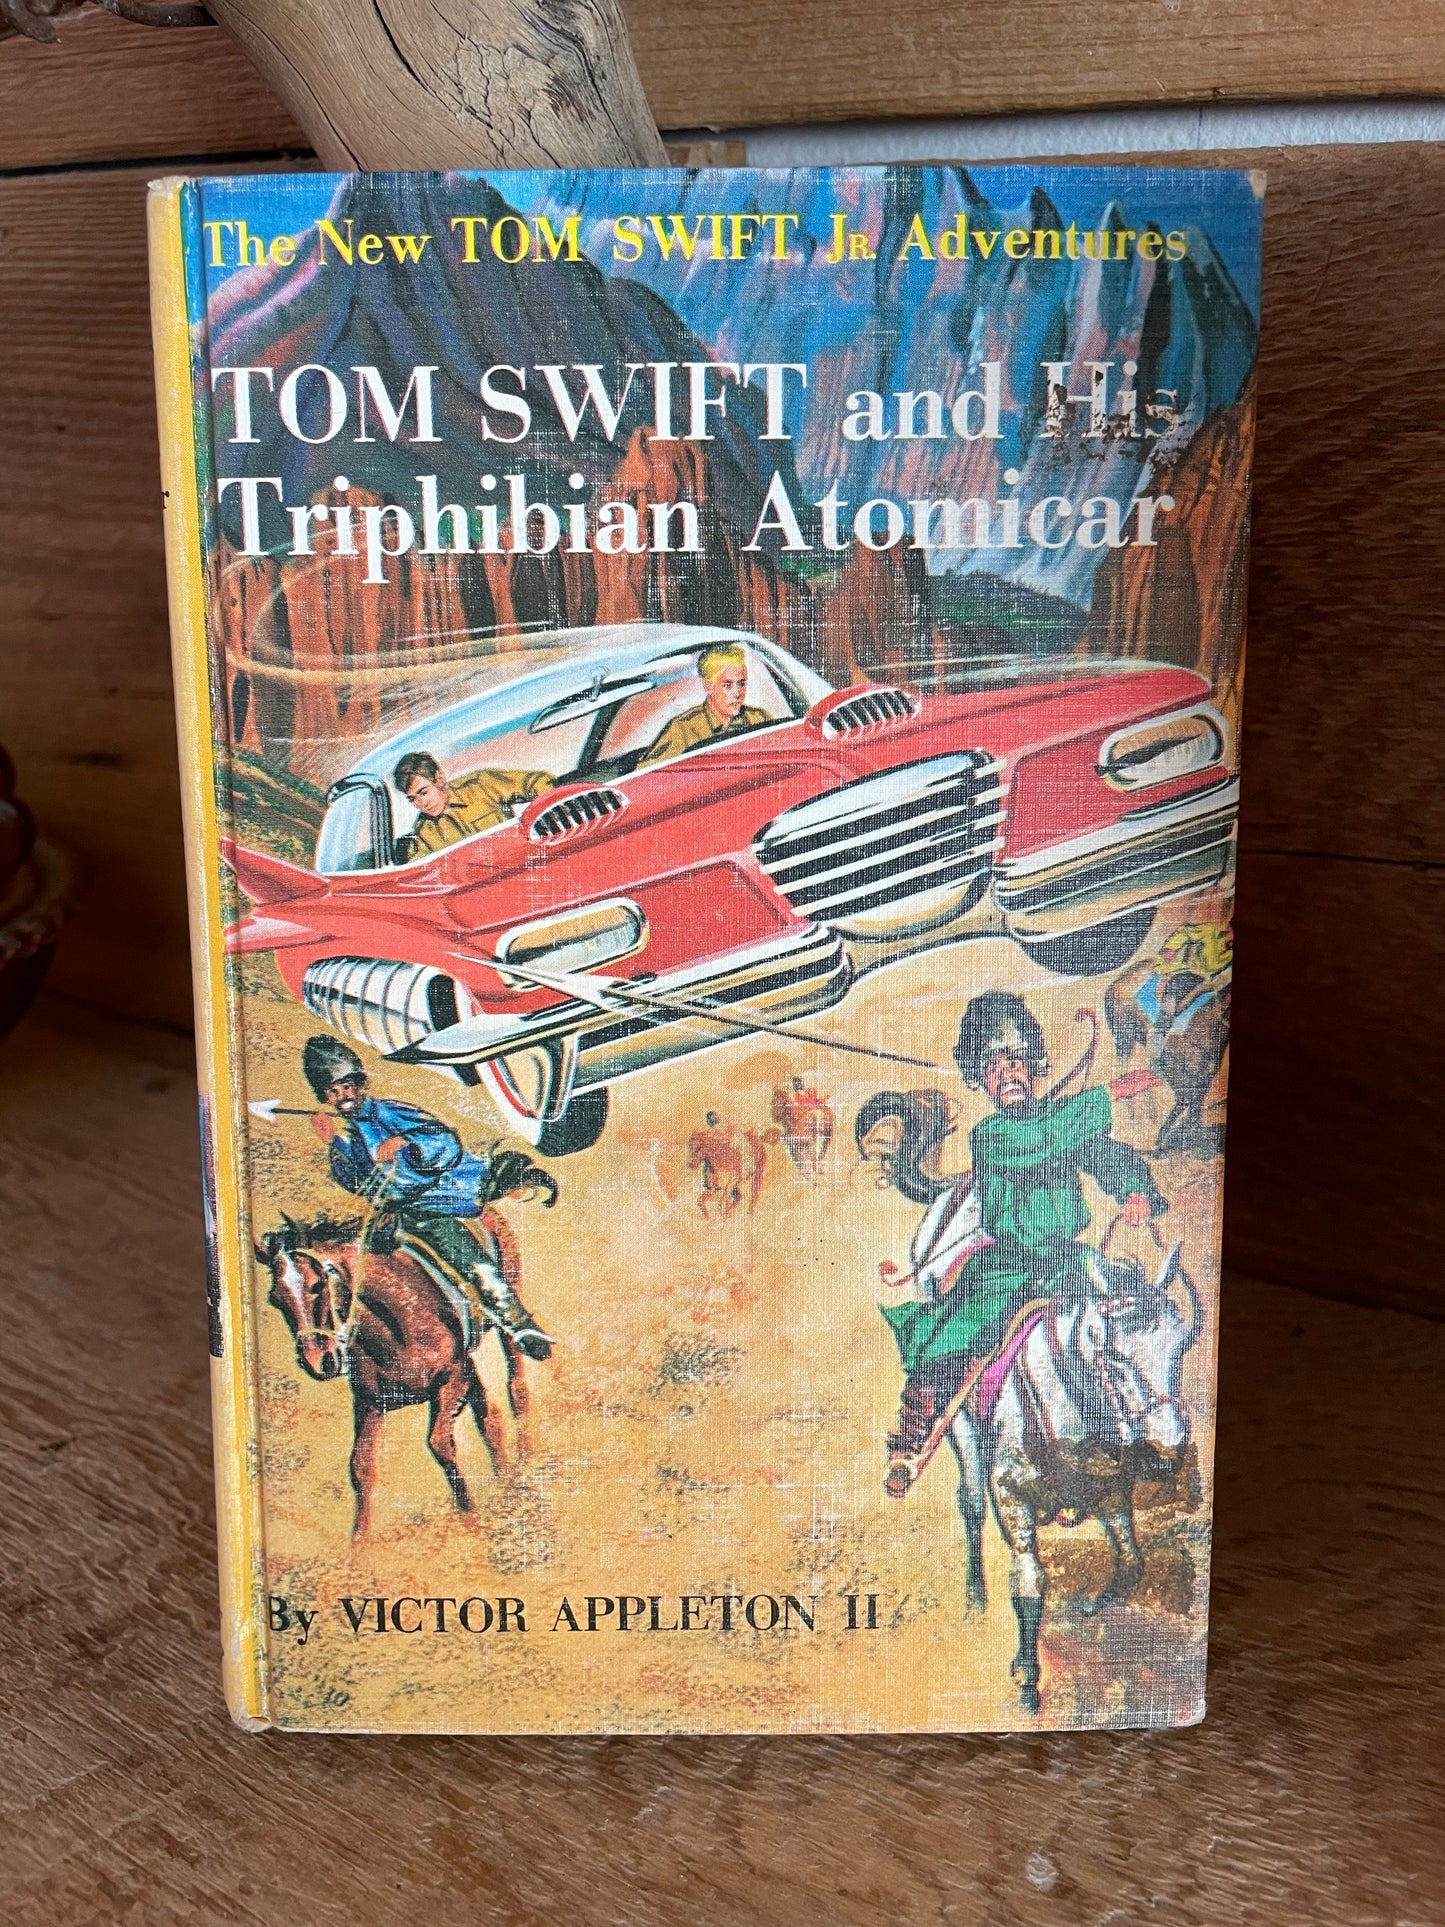 TOM SWIFT Jr. Adventures